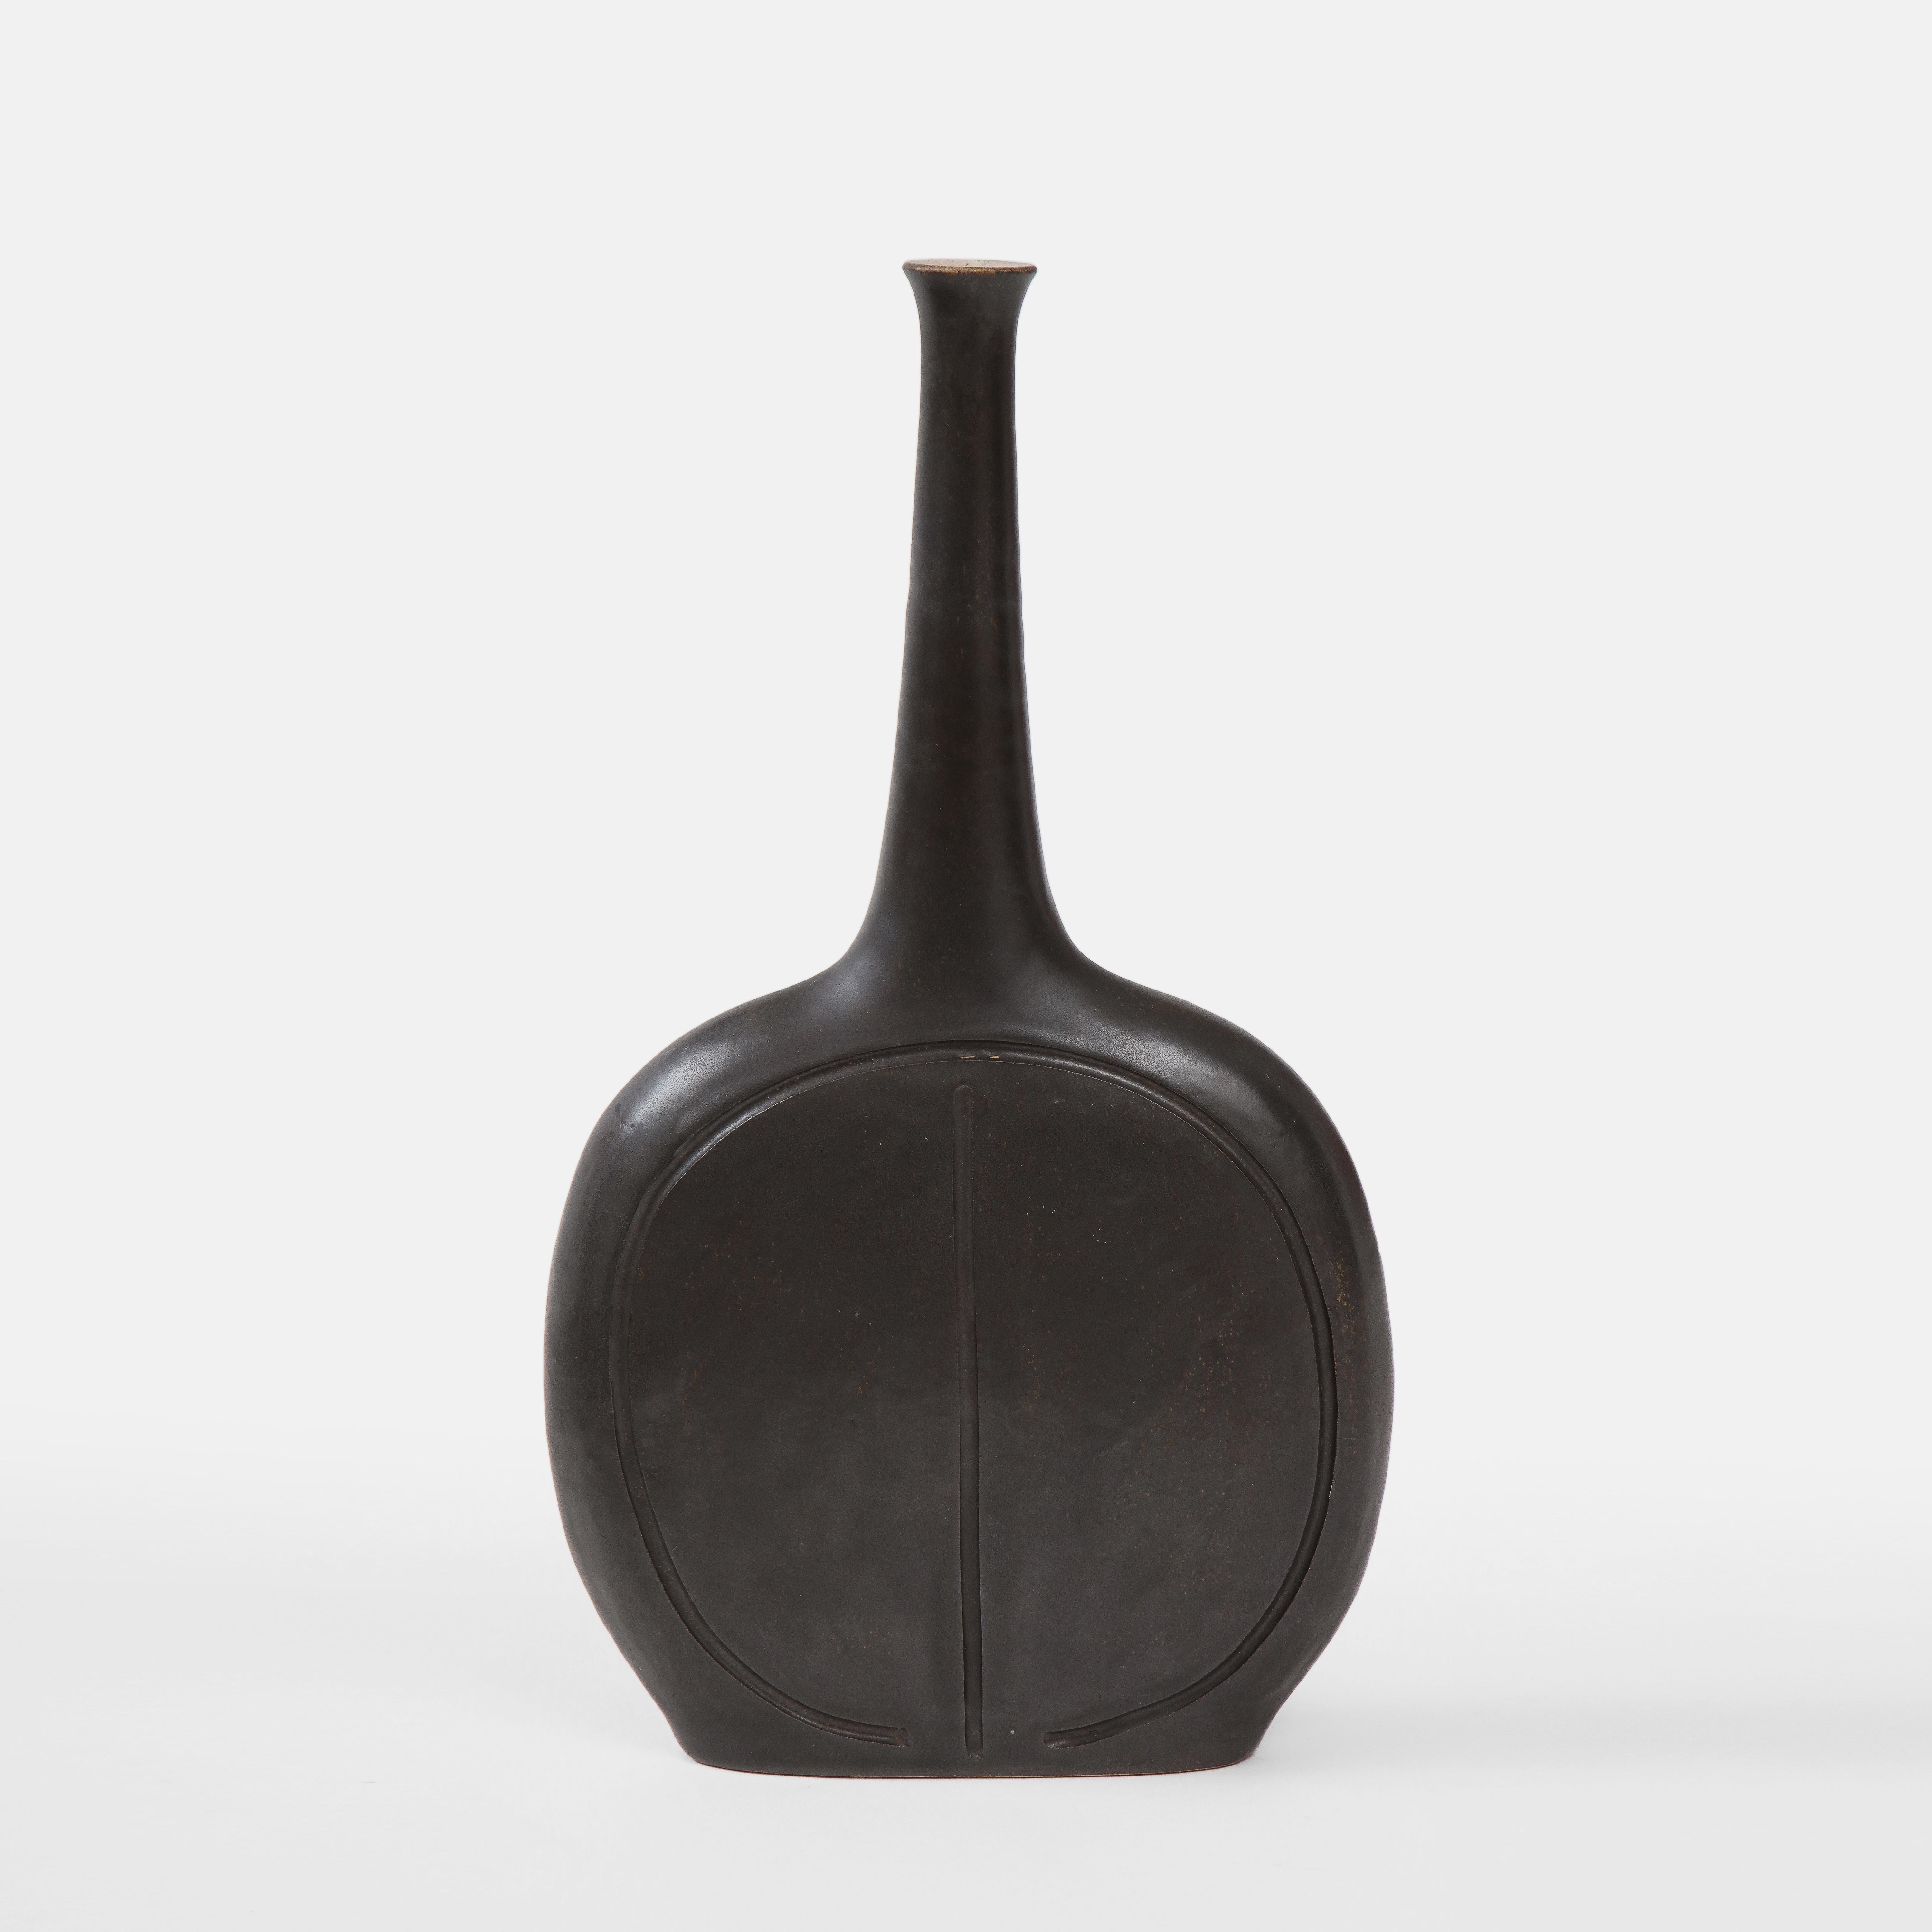 Glazed Bruno Gambone Ceramic Vase or Bottle, Italy, 1970s For Sale